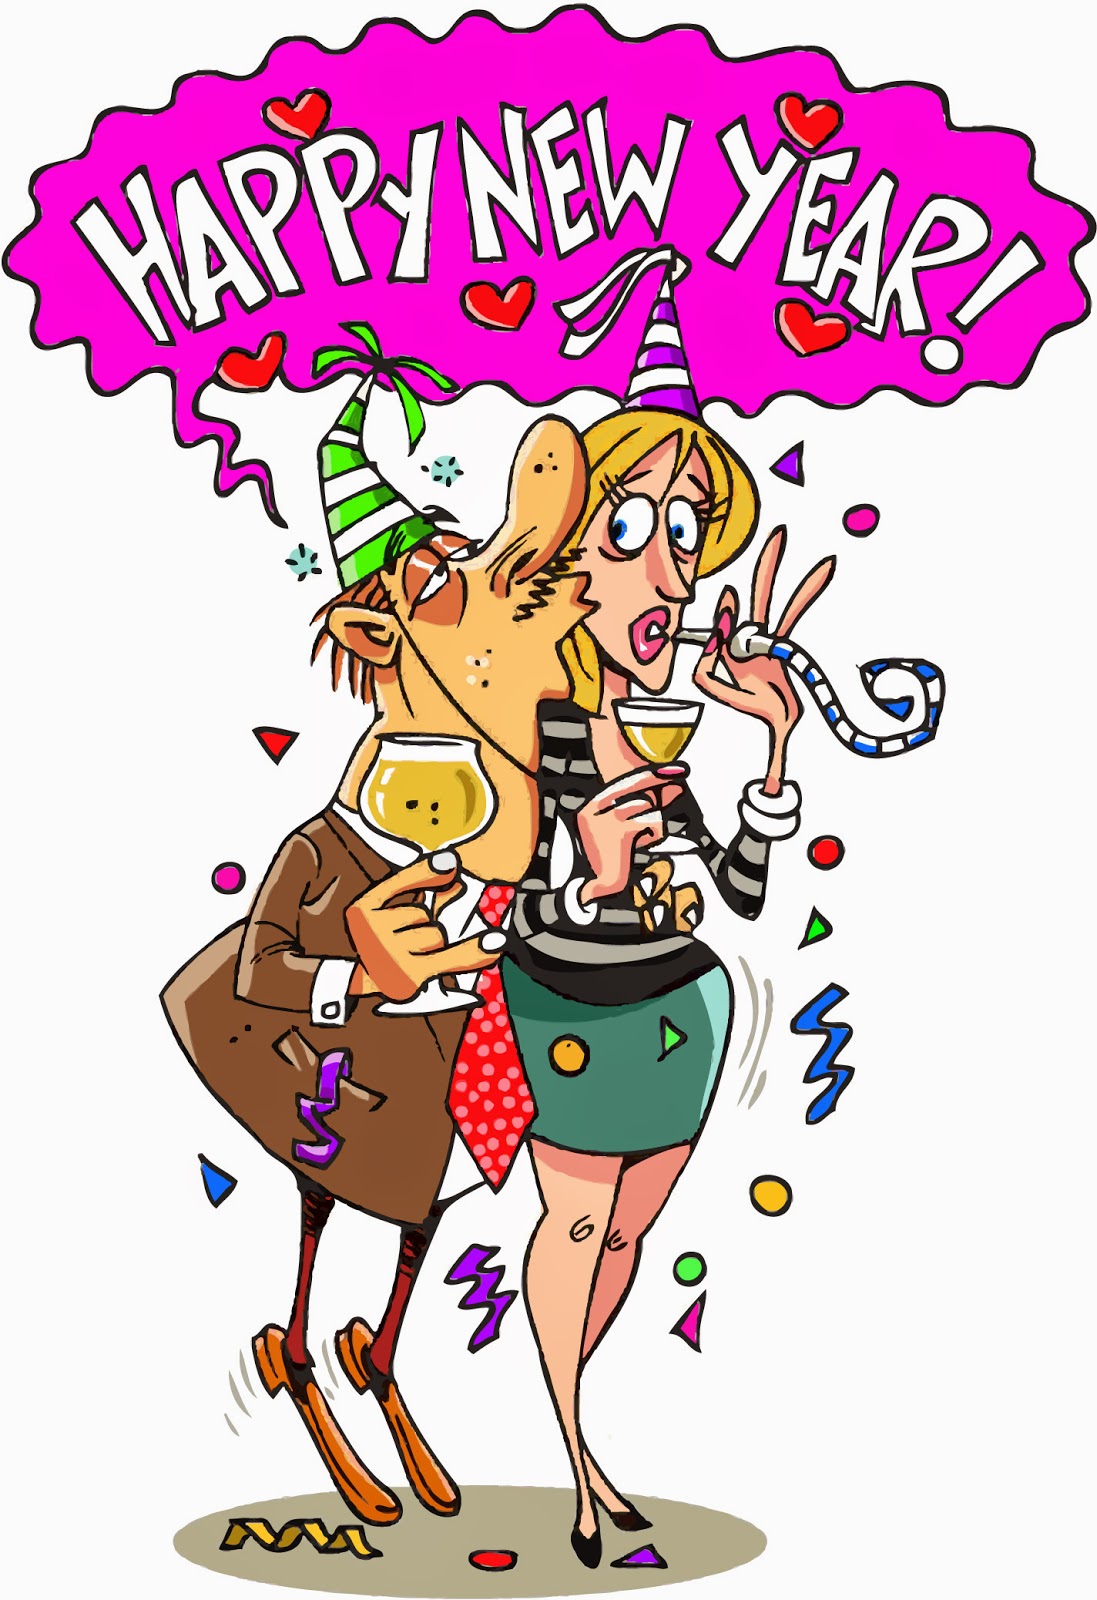 Happy New Year Cartoon Image Wallpaper